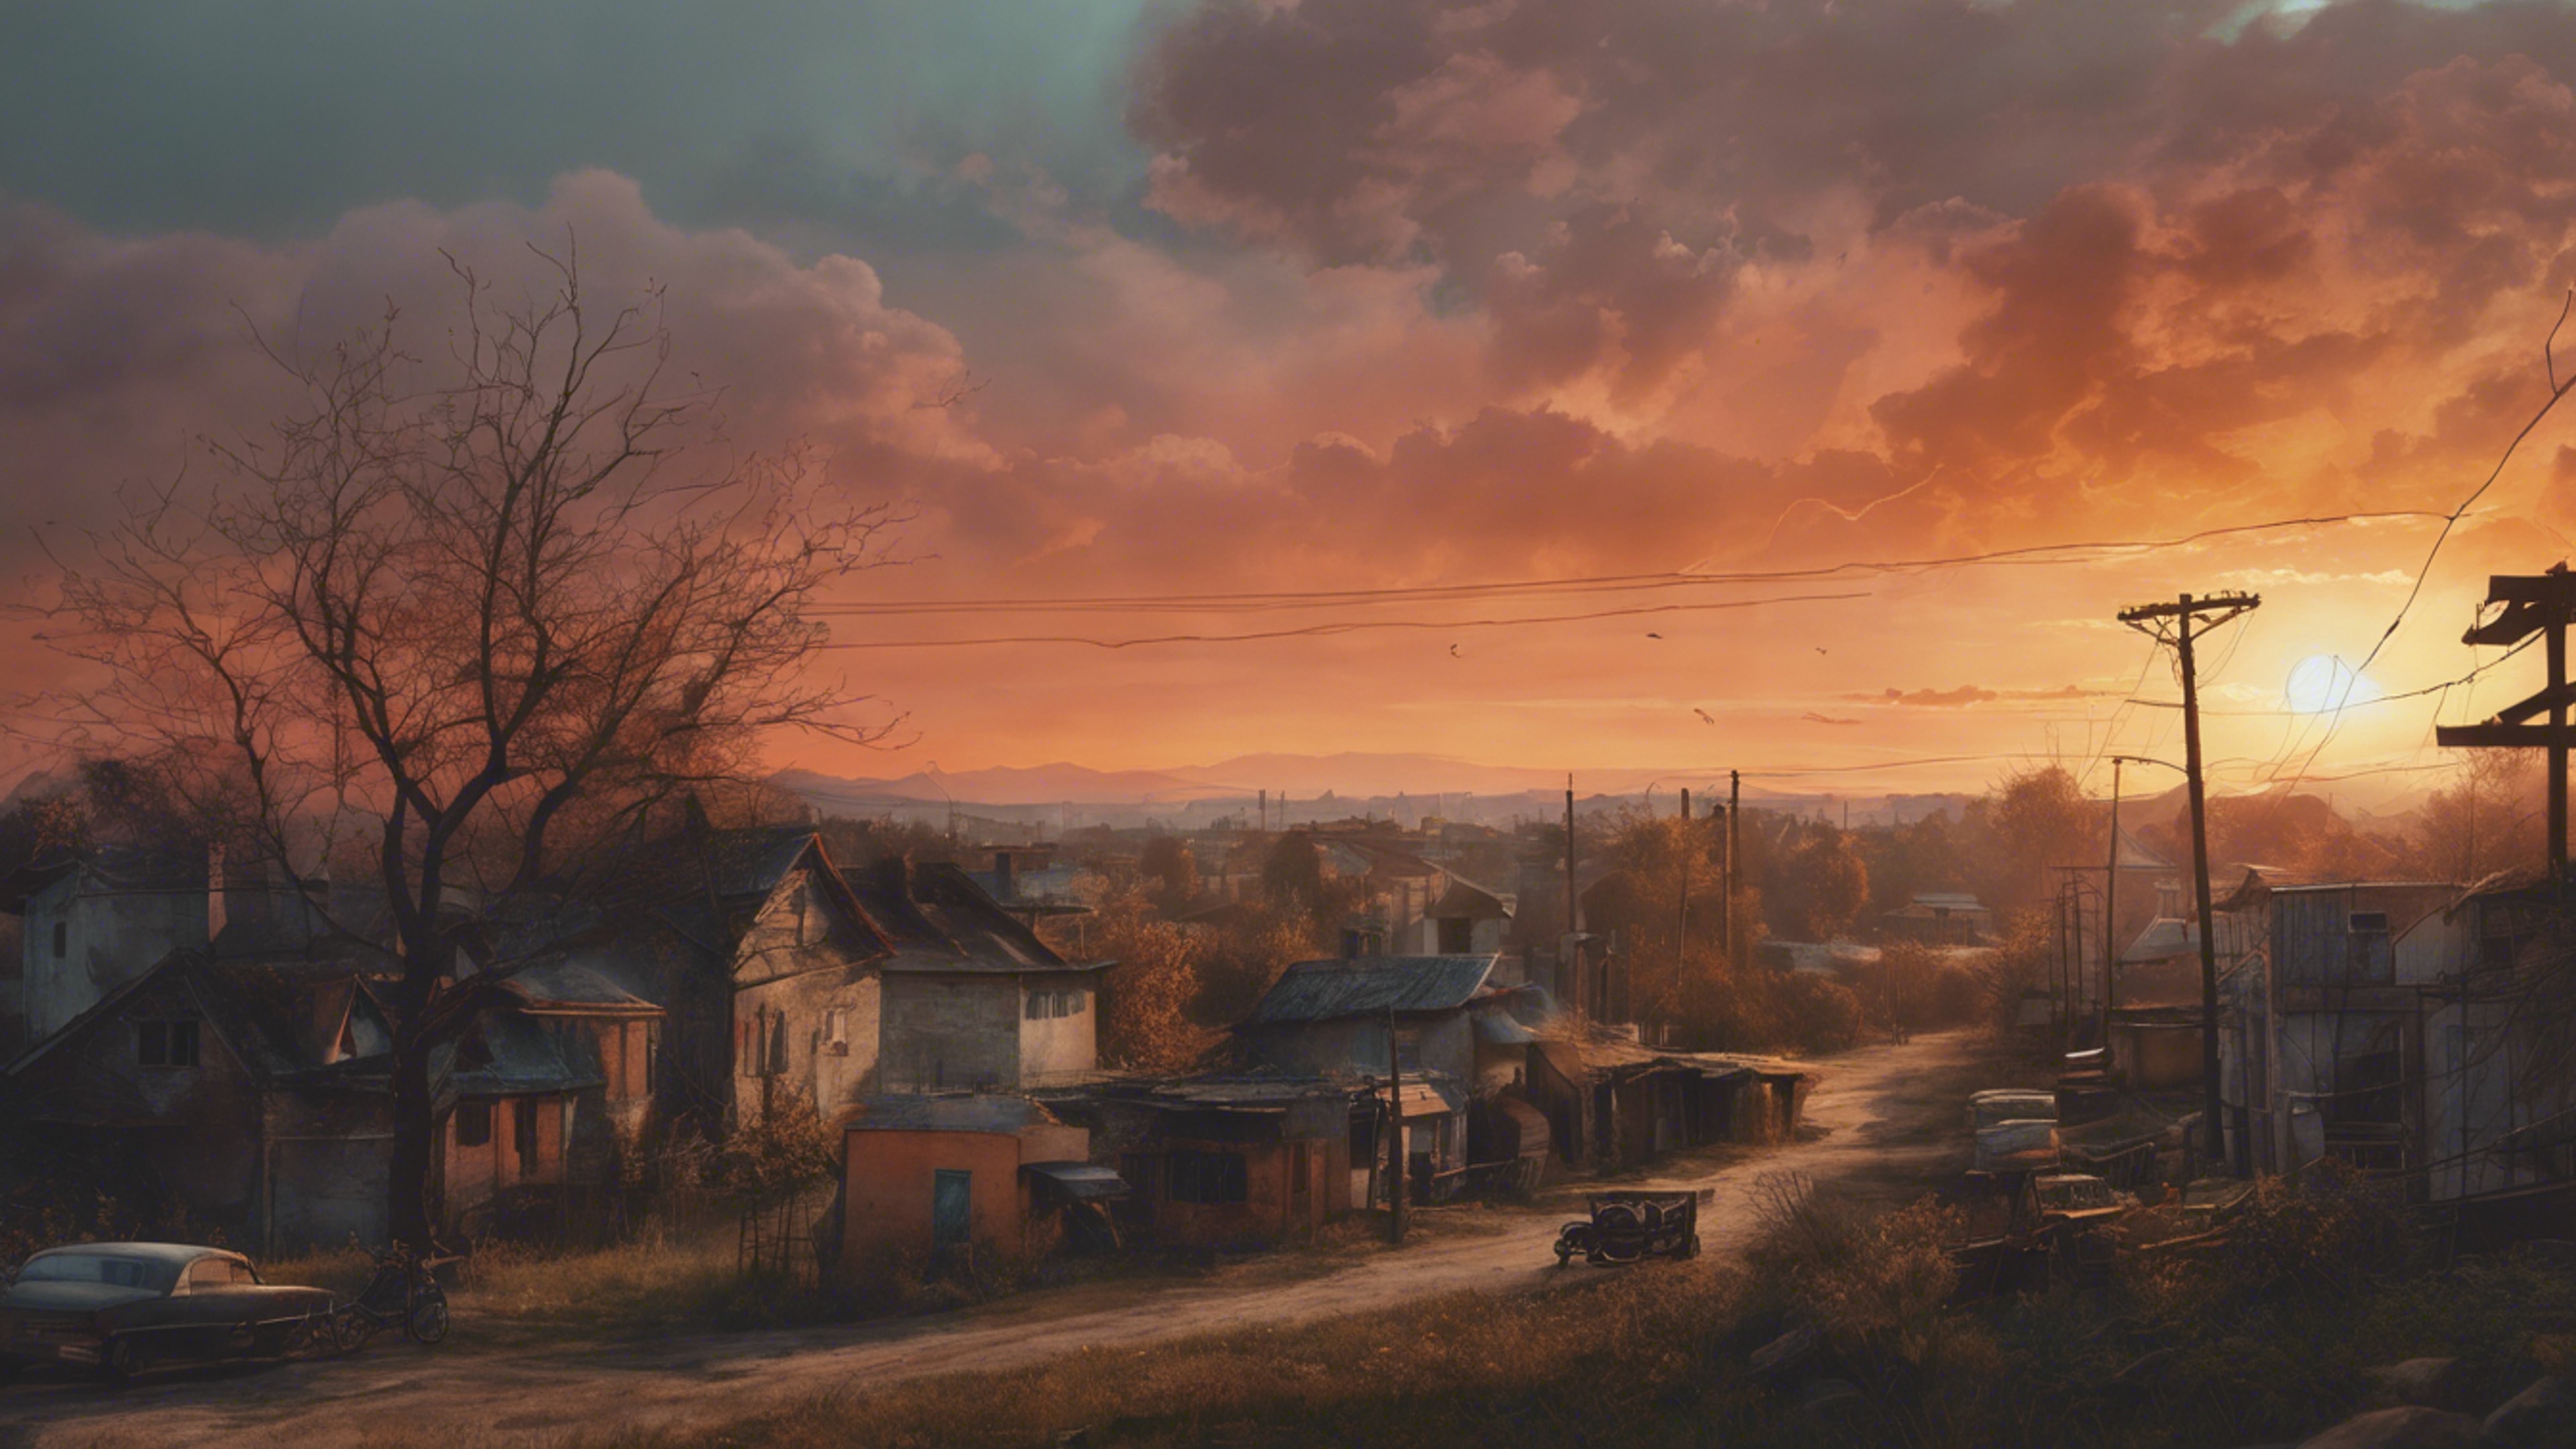 An evocative painting of a nostalgic sunset over a forgotten hometown. Tapeta[c4b7fcd1dd4d40f1b7ab]